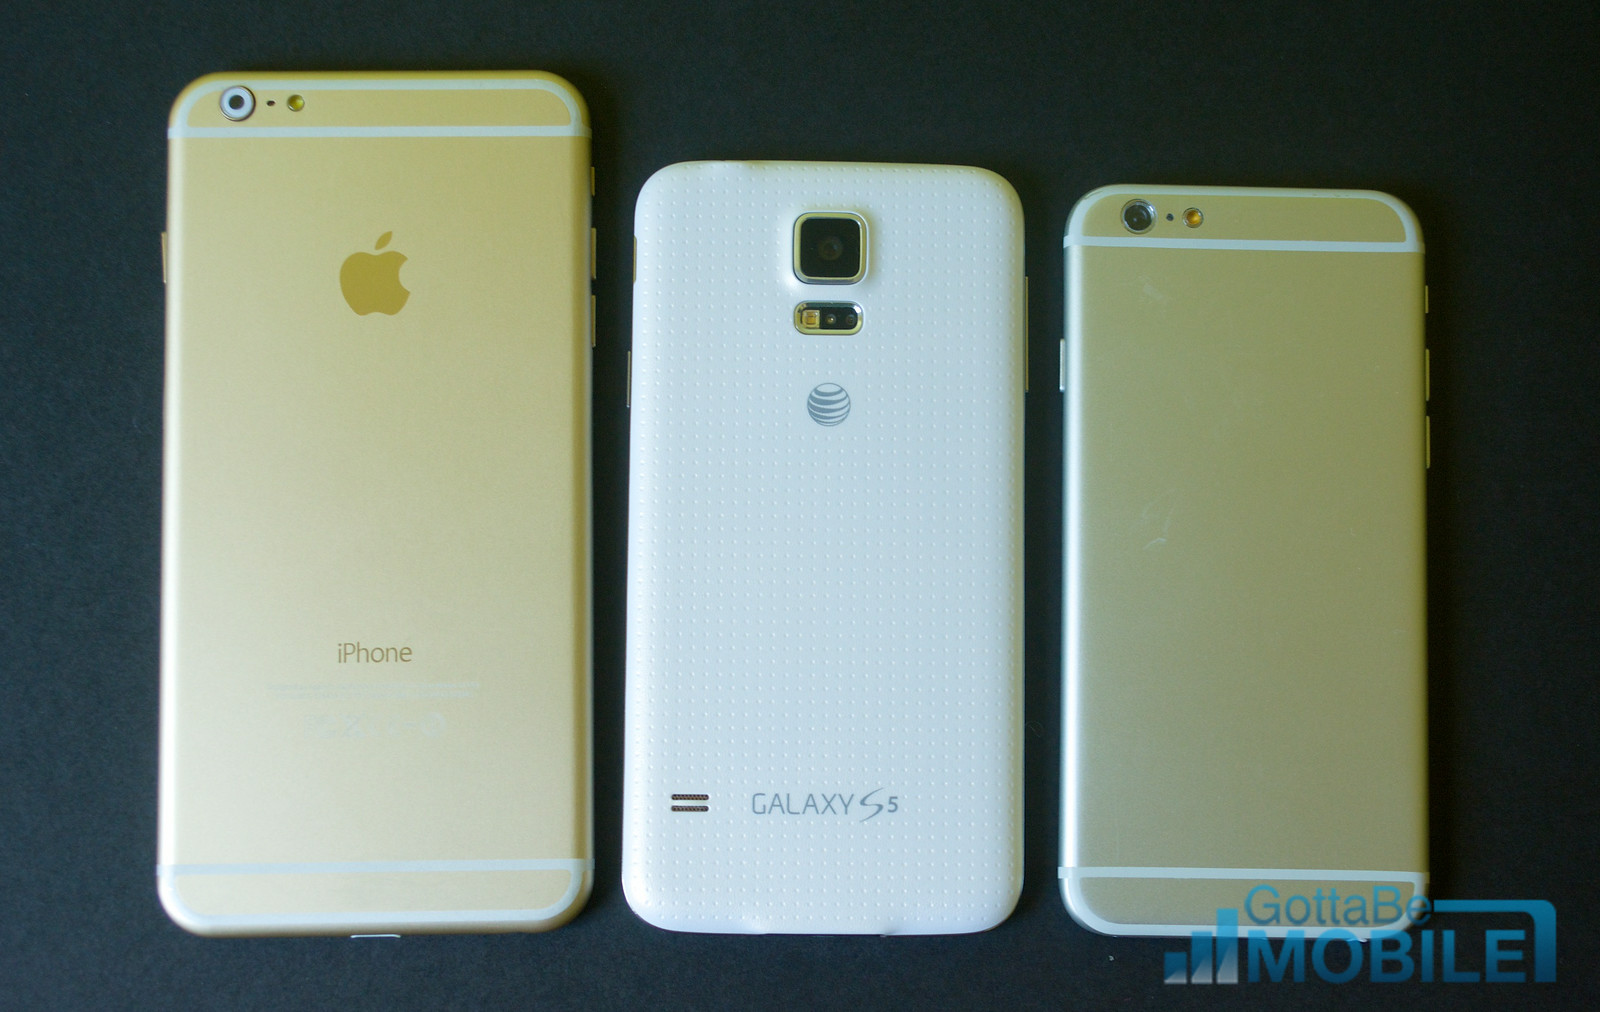 iPhone-6-vs-Galaxy-S5-Size-Comparison.jpg